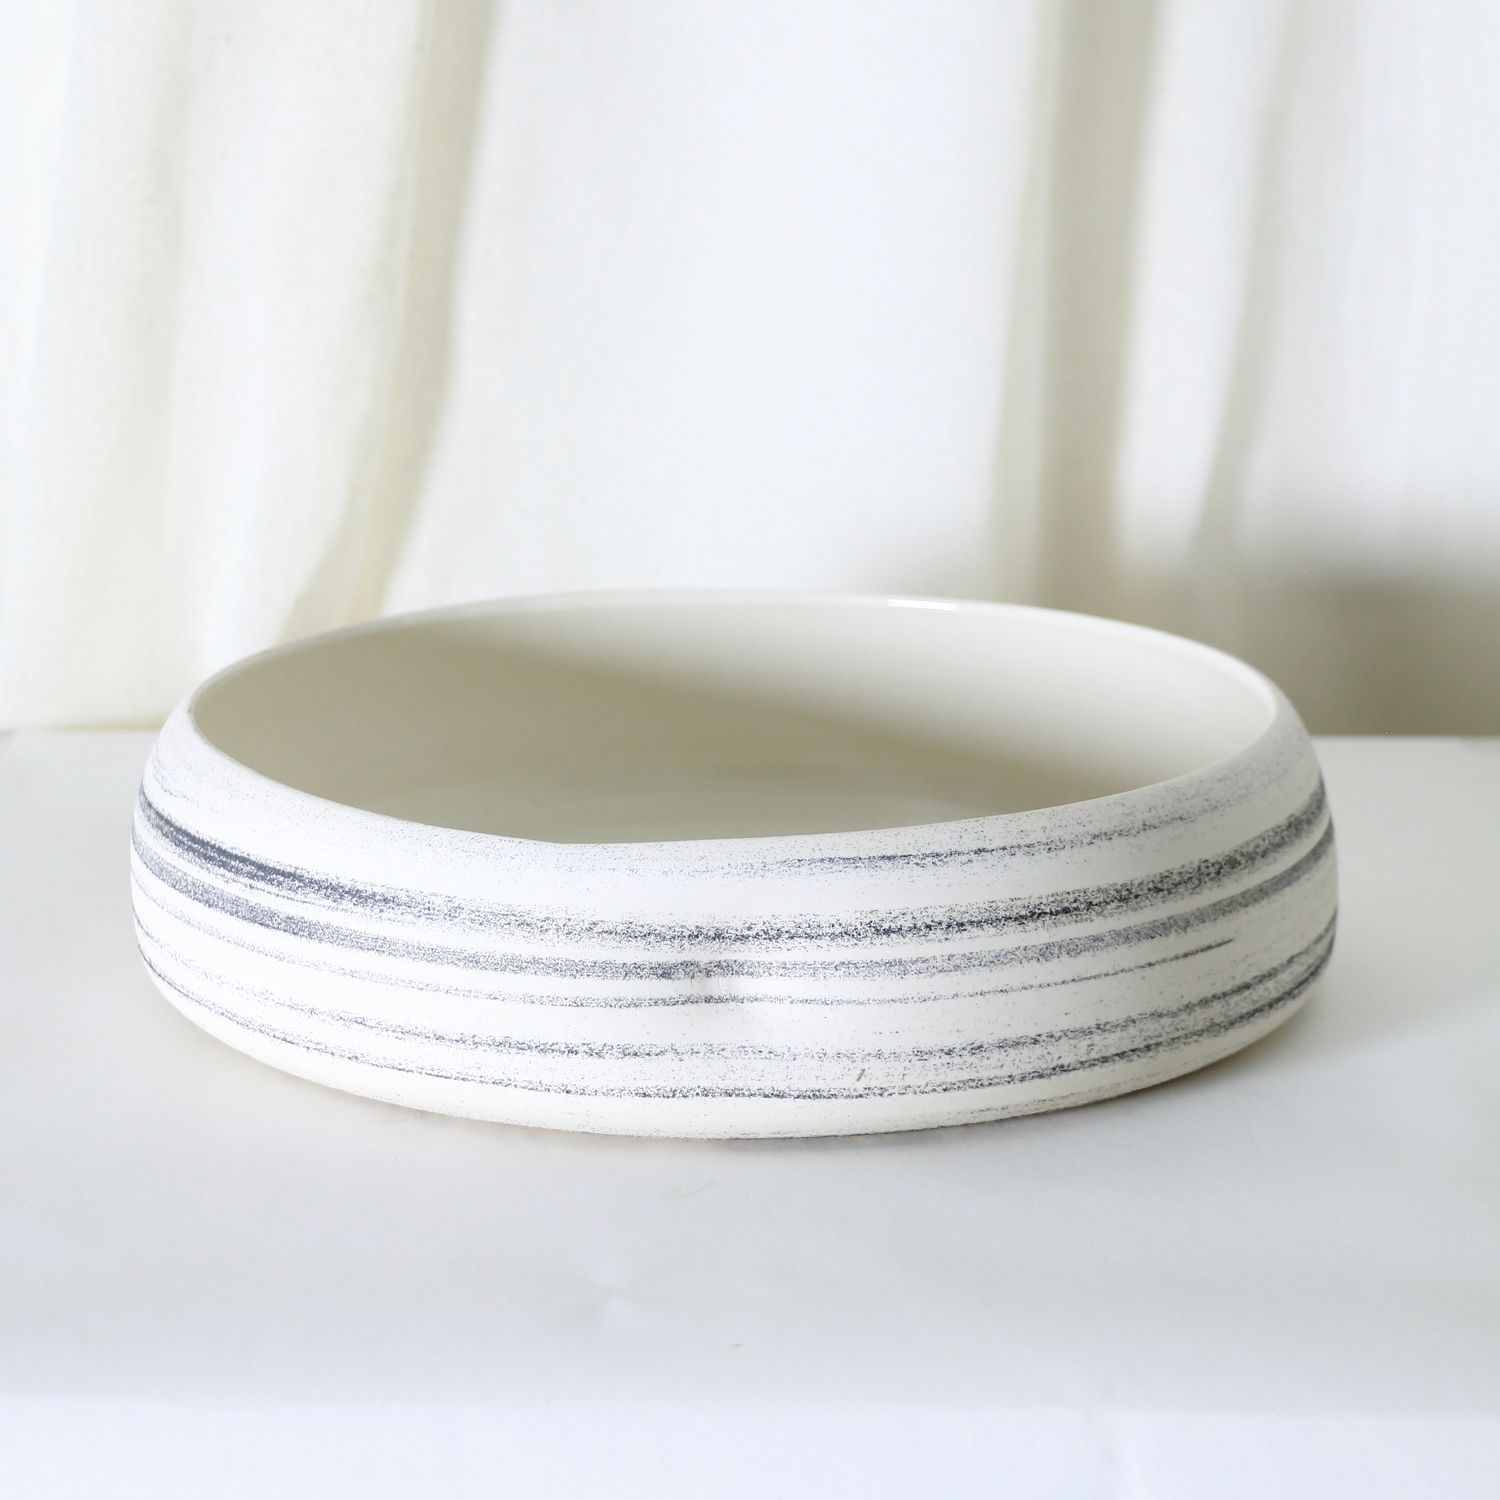 Celina Kang: Large Meta-morphic Bowl (White) Product Image 1 of 1